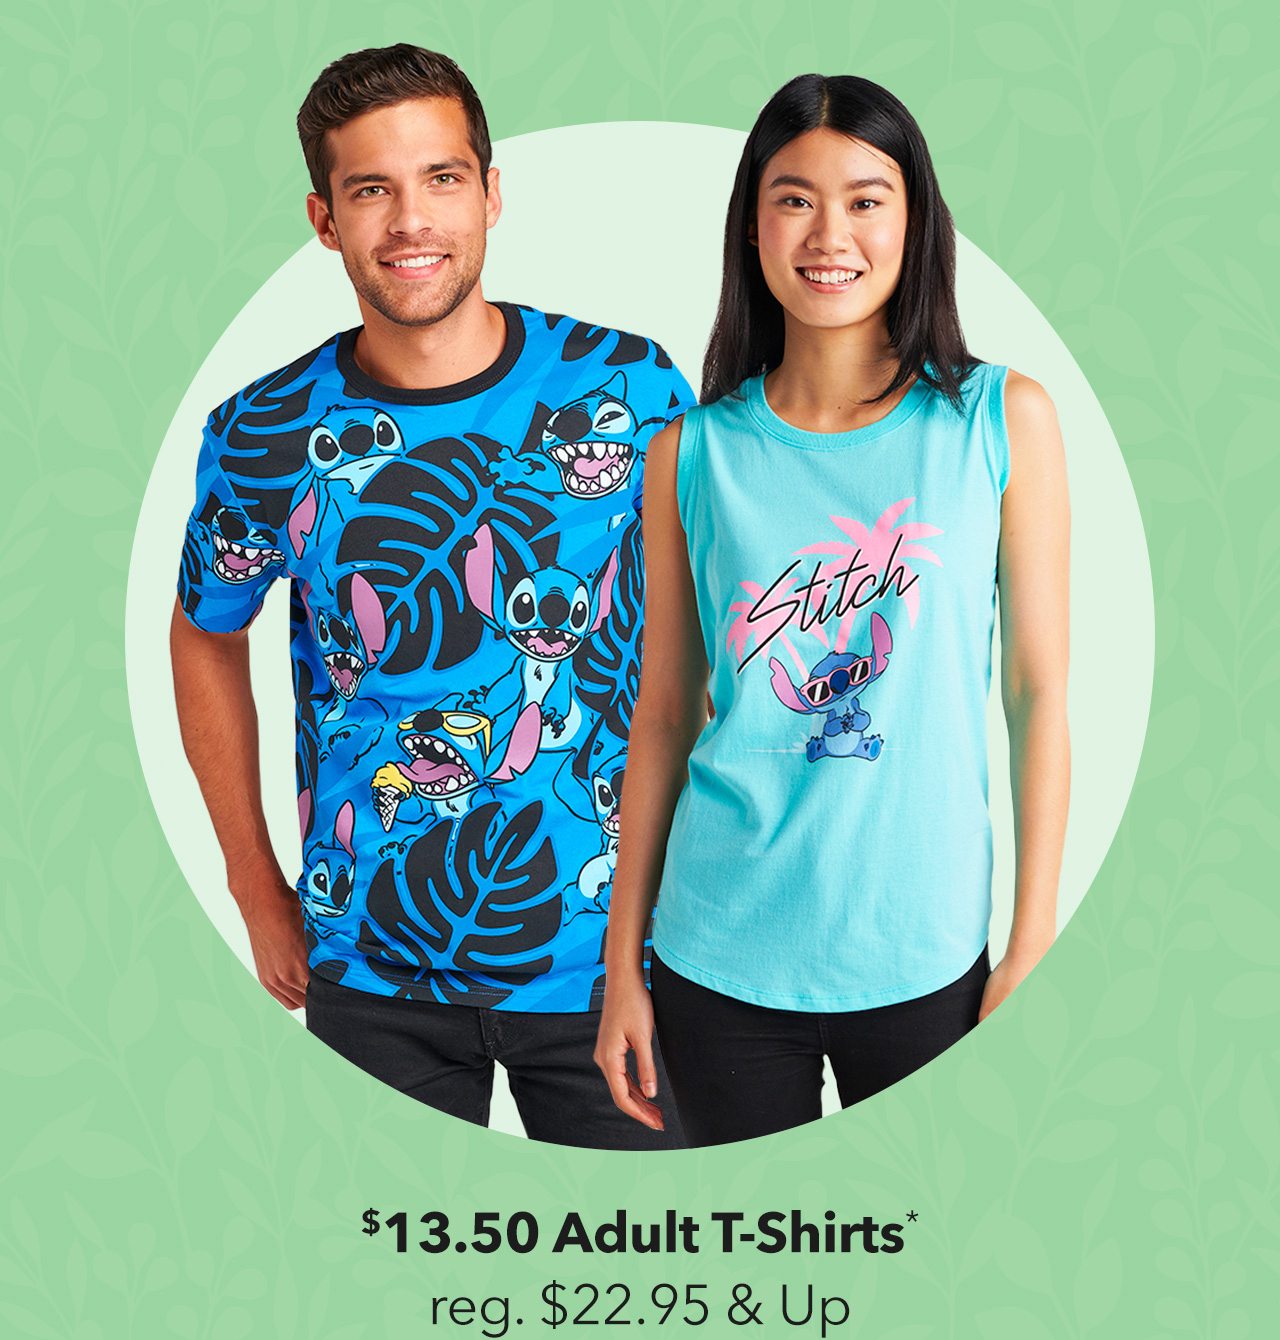 Adult TShirts | Shop Now